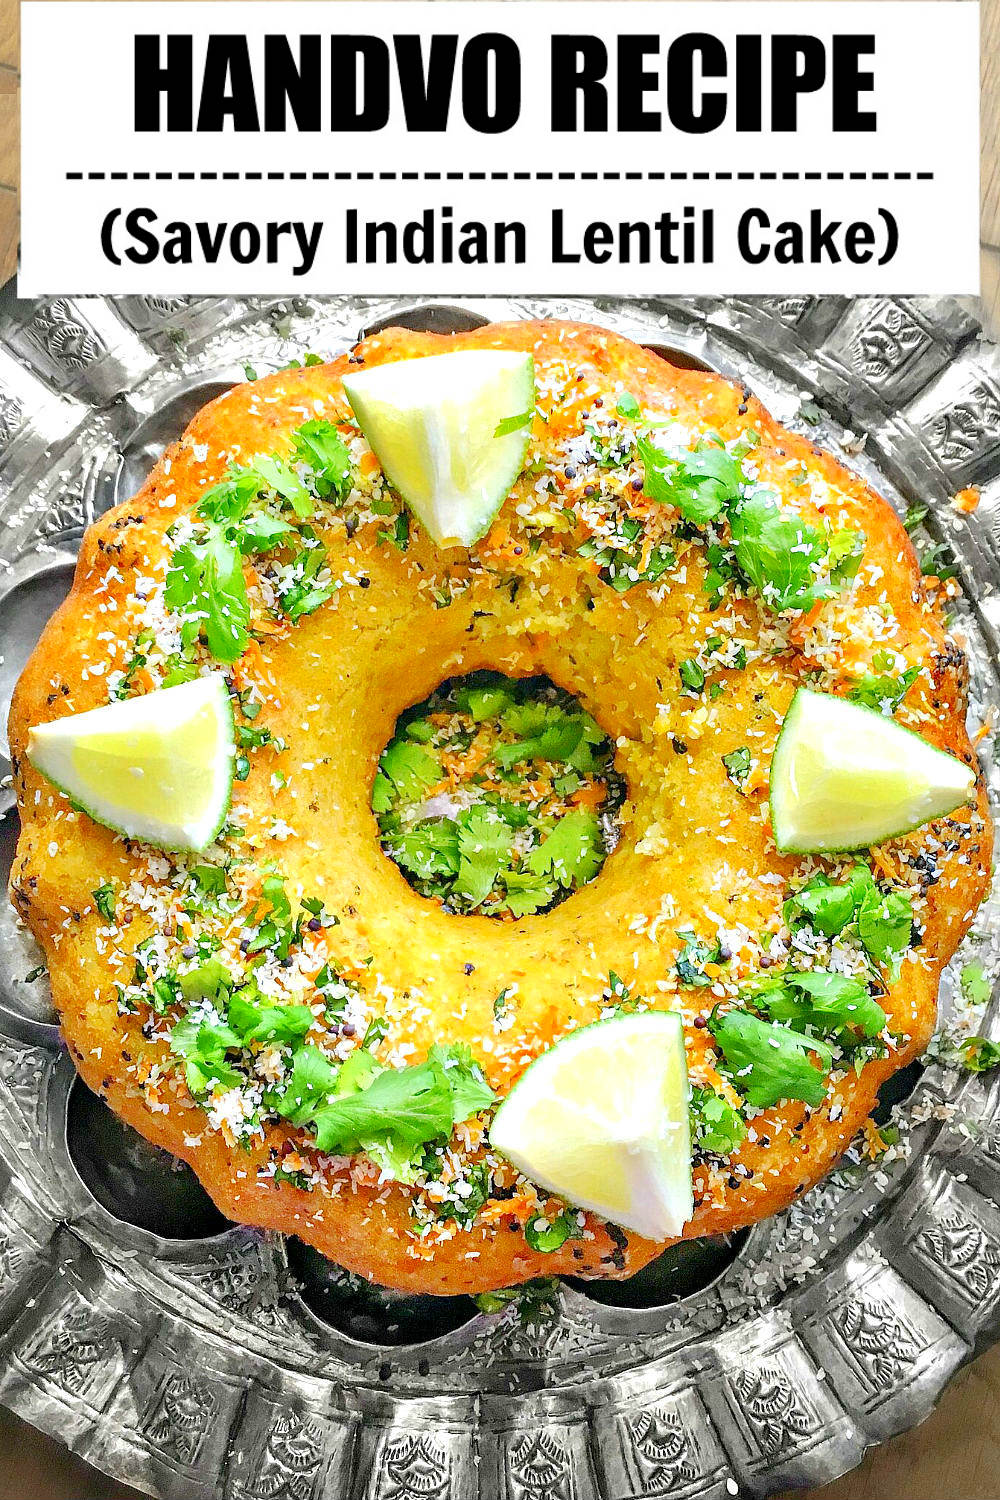 Baked Handvo Recipe - Savory Indian Lentil Cake Recipe